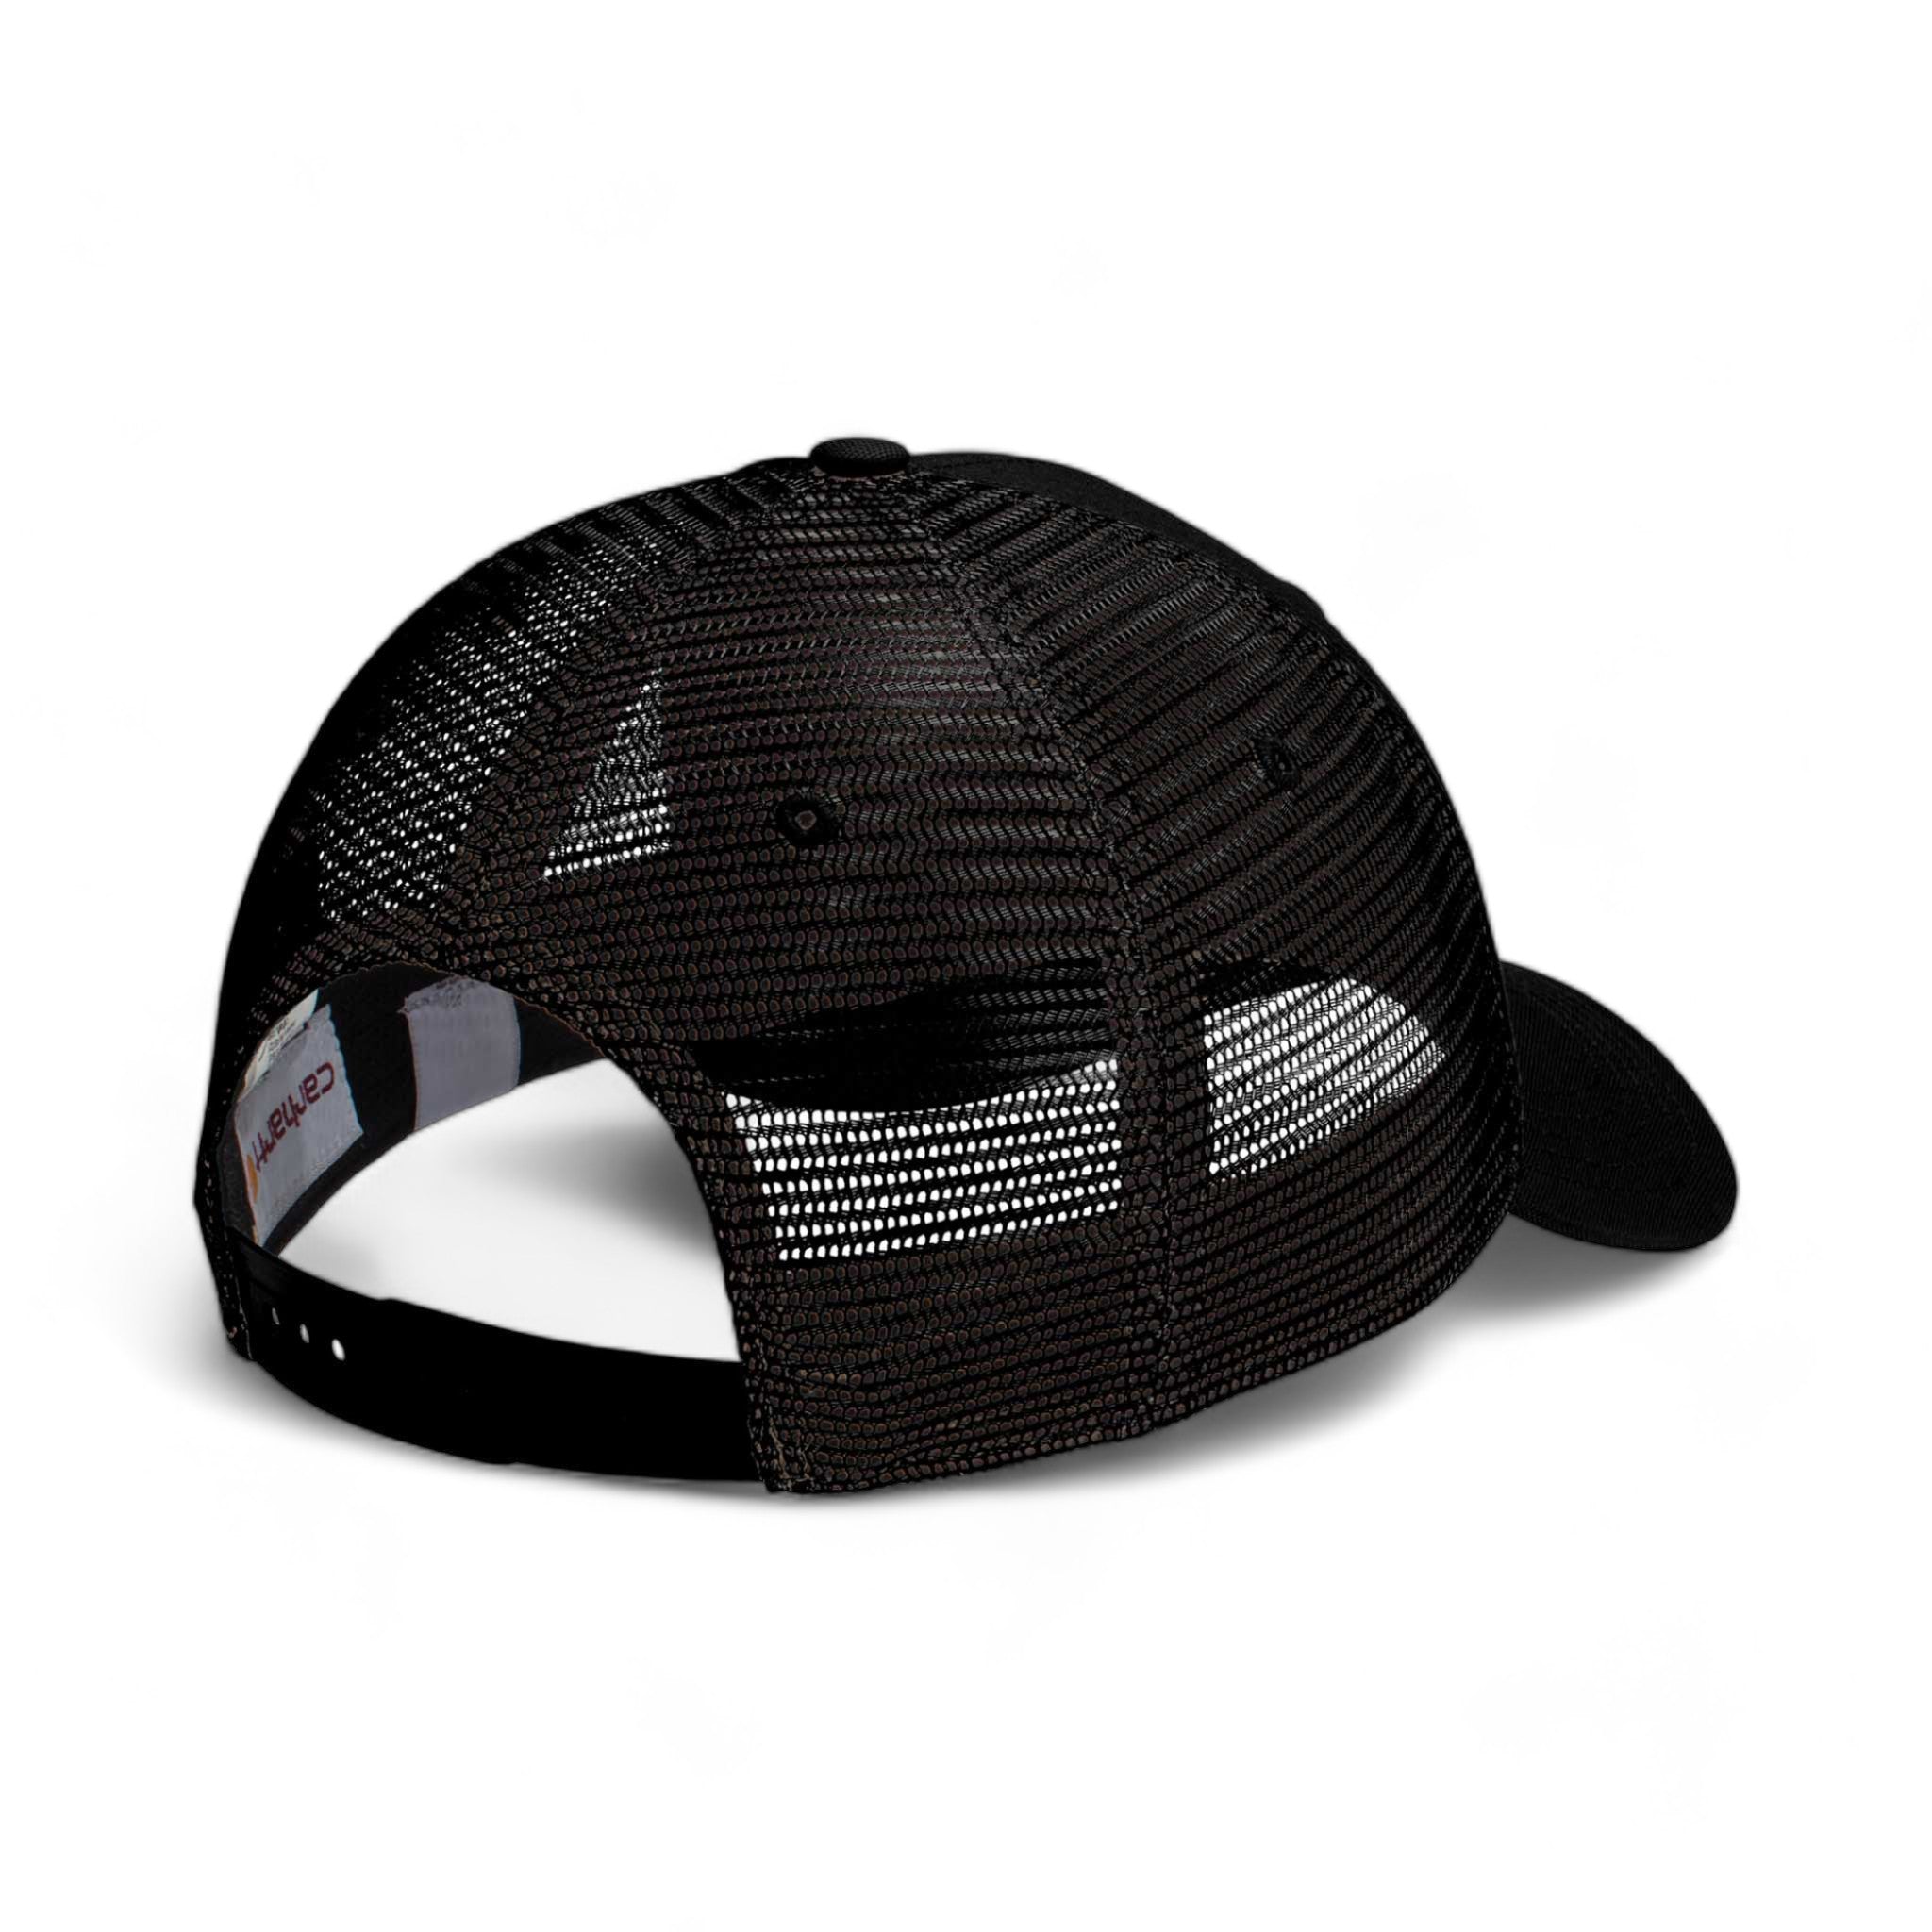 Back view of Carhartt CT103056 custom hat in black